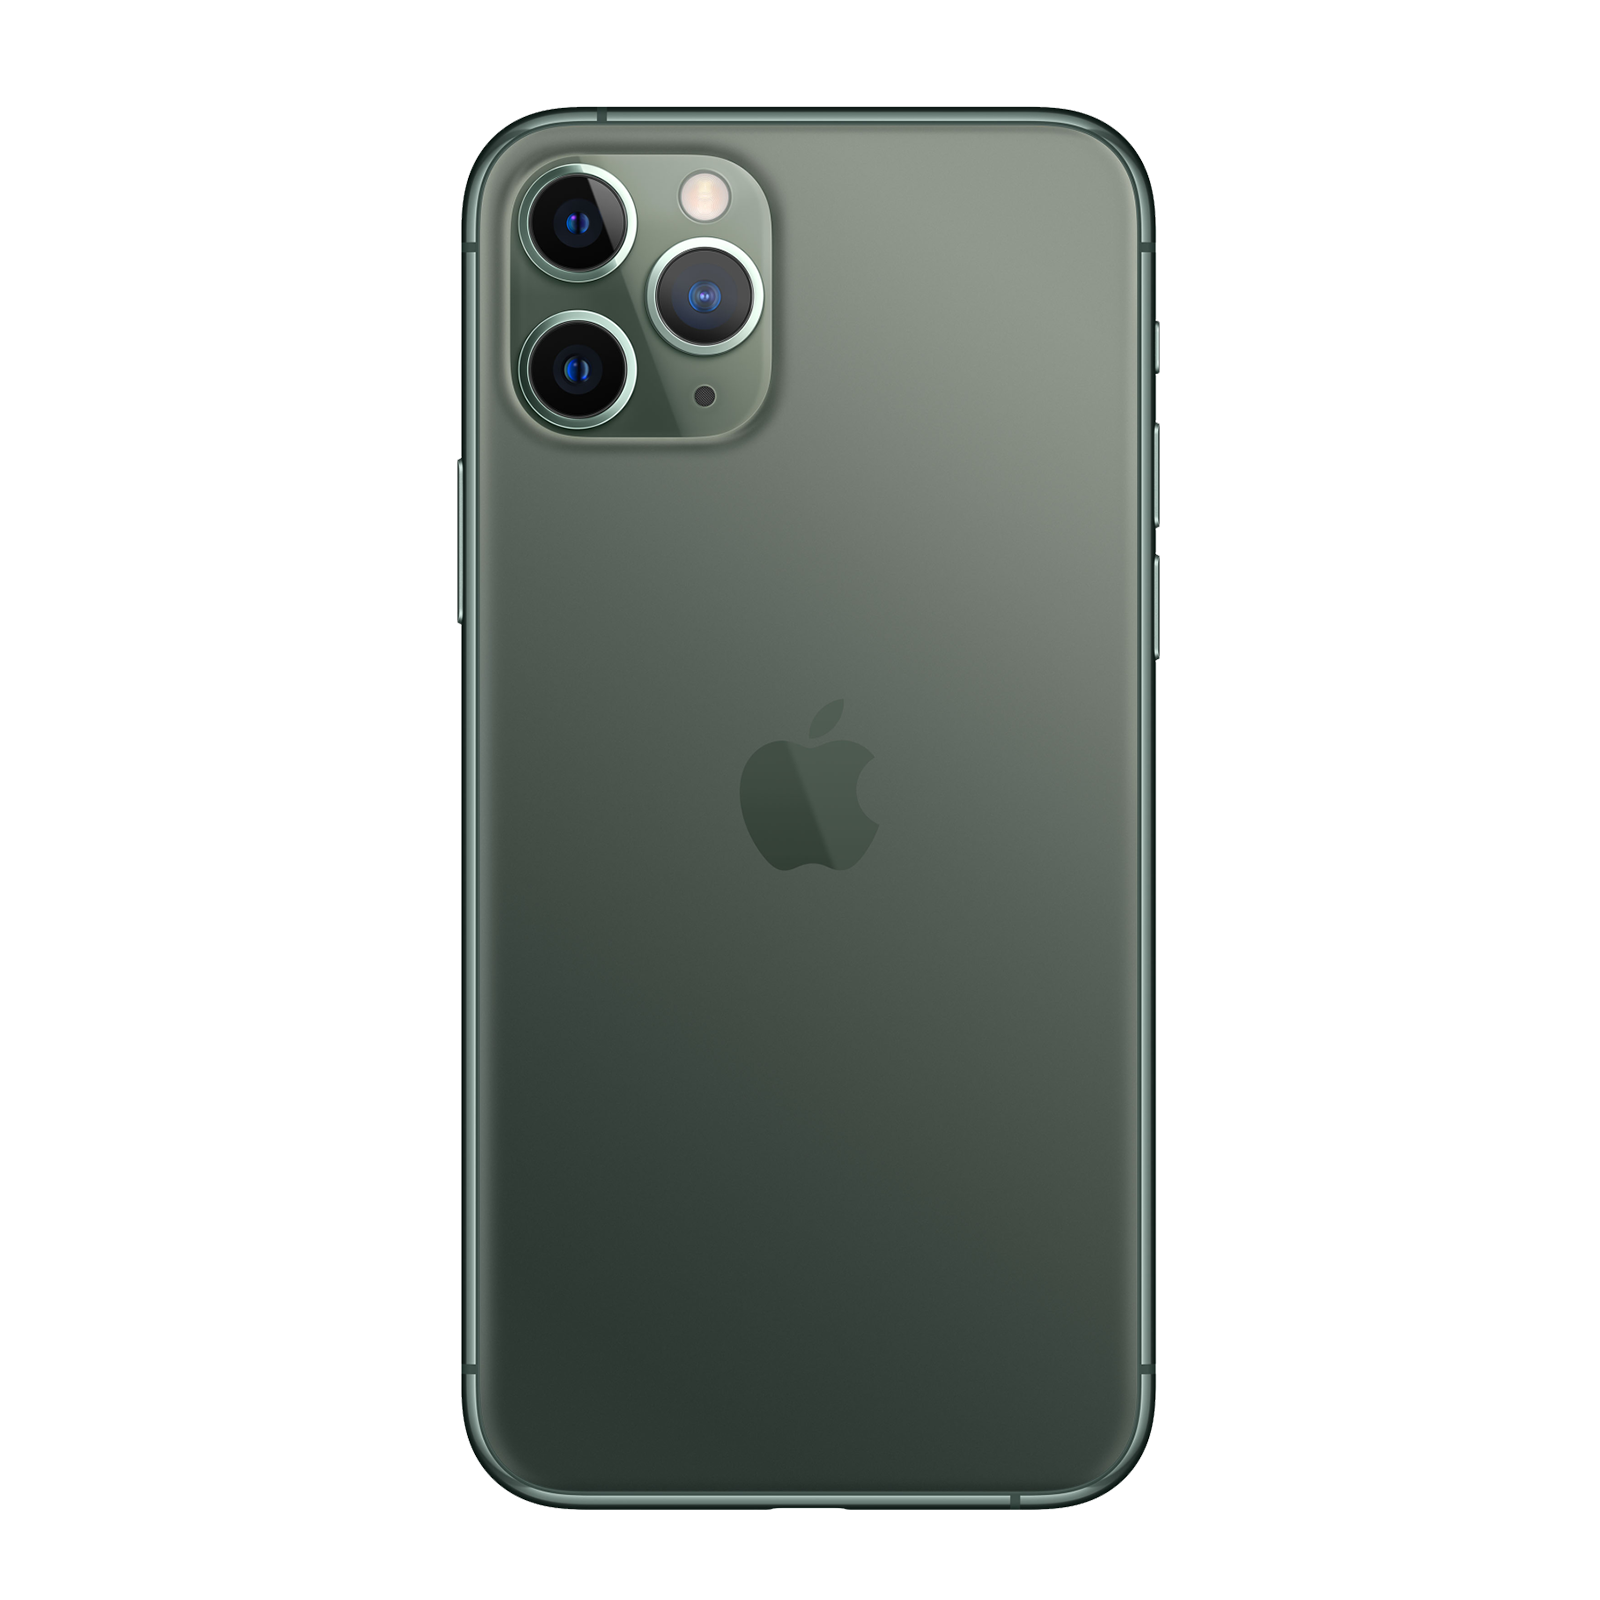 Apple iPhone 11 Pro Max 64GB Midnight Green Good - Unlocked